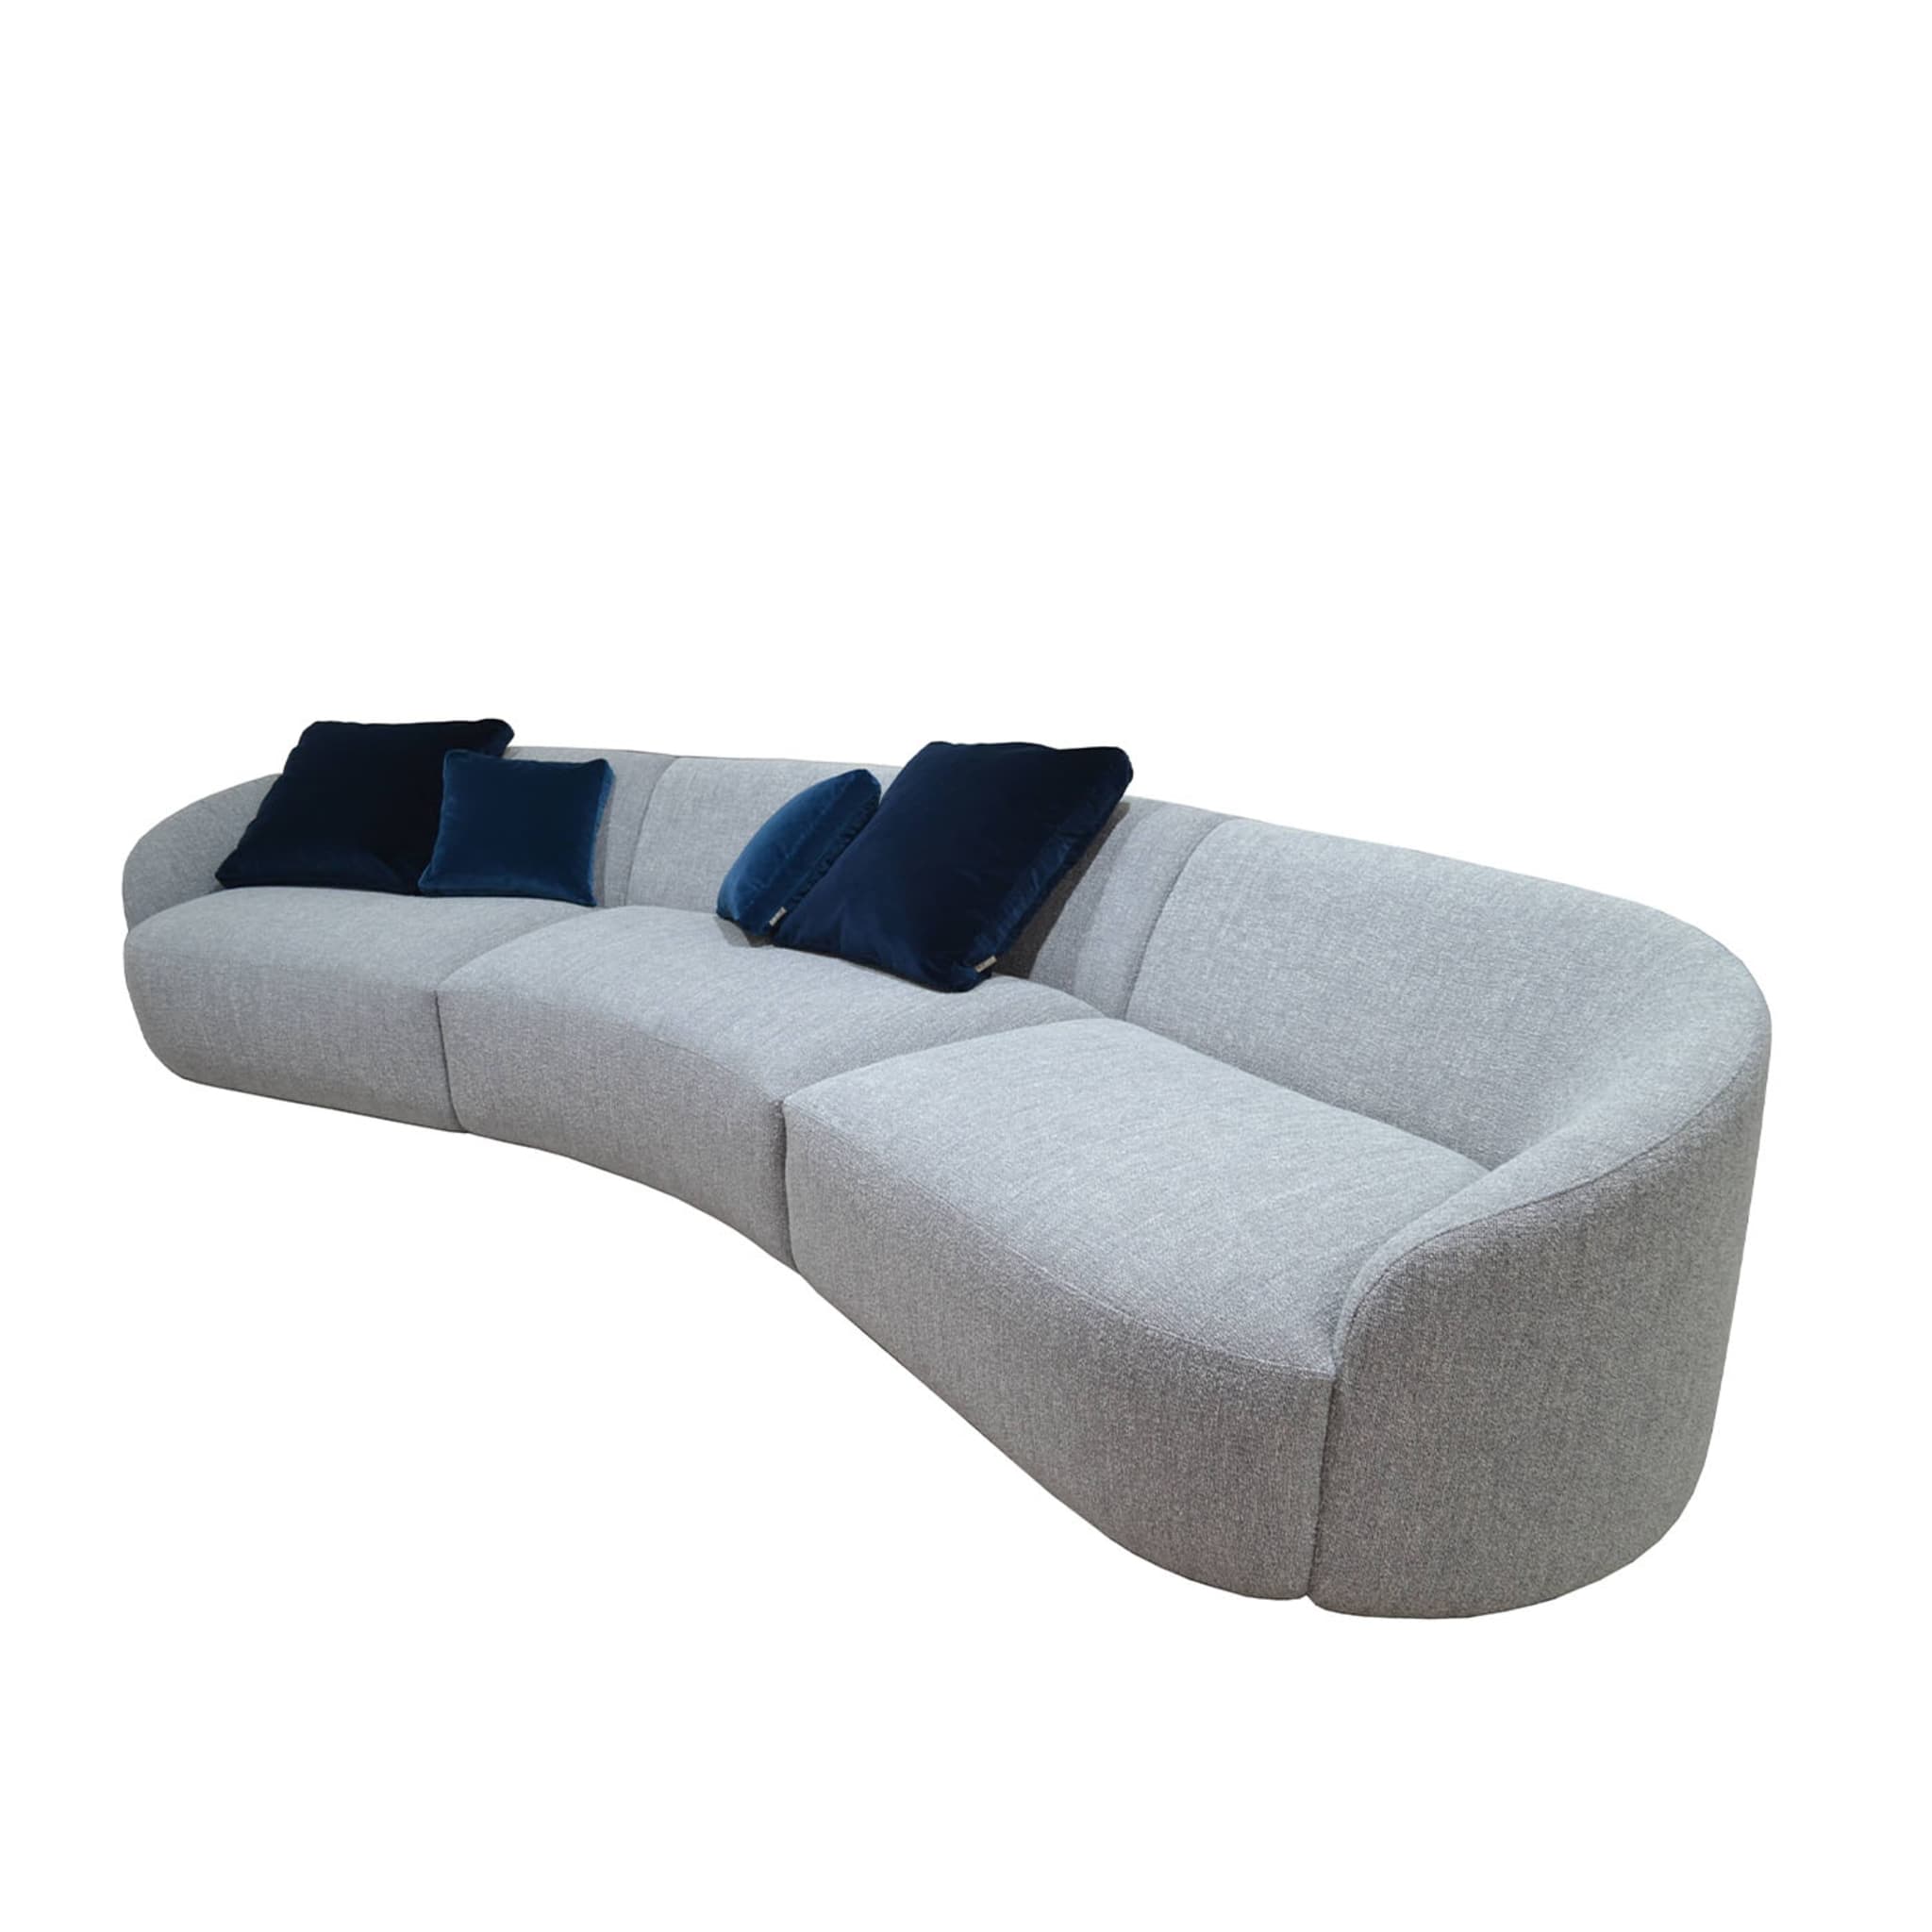 Cottonflower Modular Sofa in Torri Lana Grau Boucle - Alternative Ansicht 1